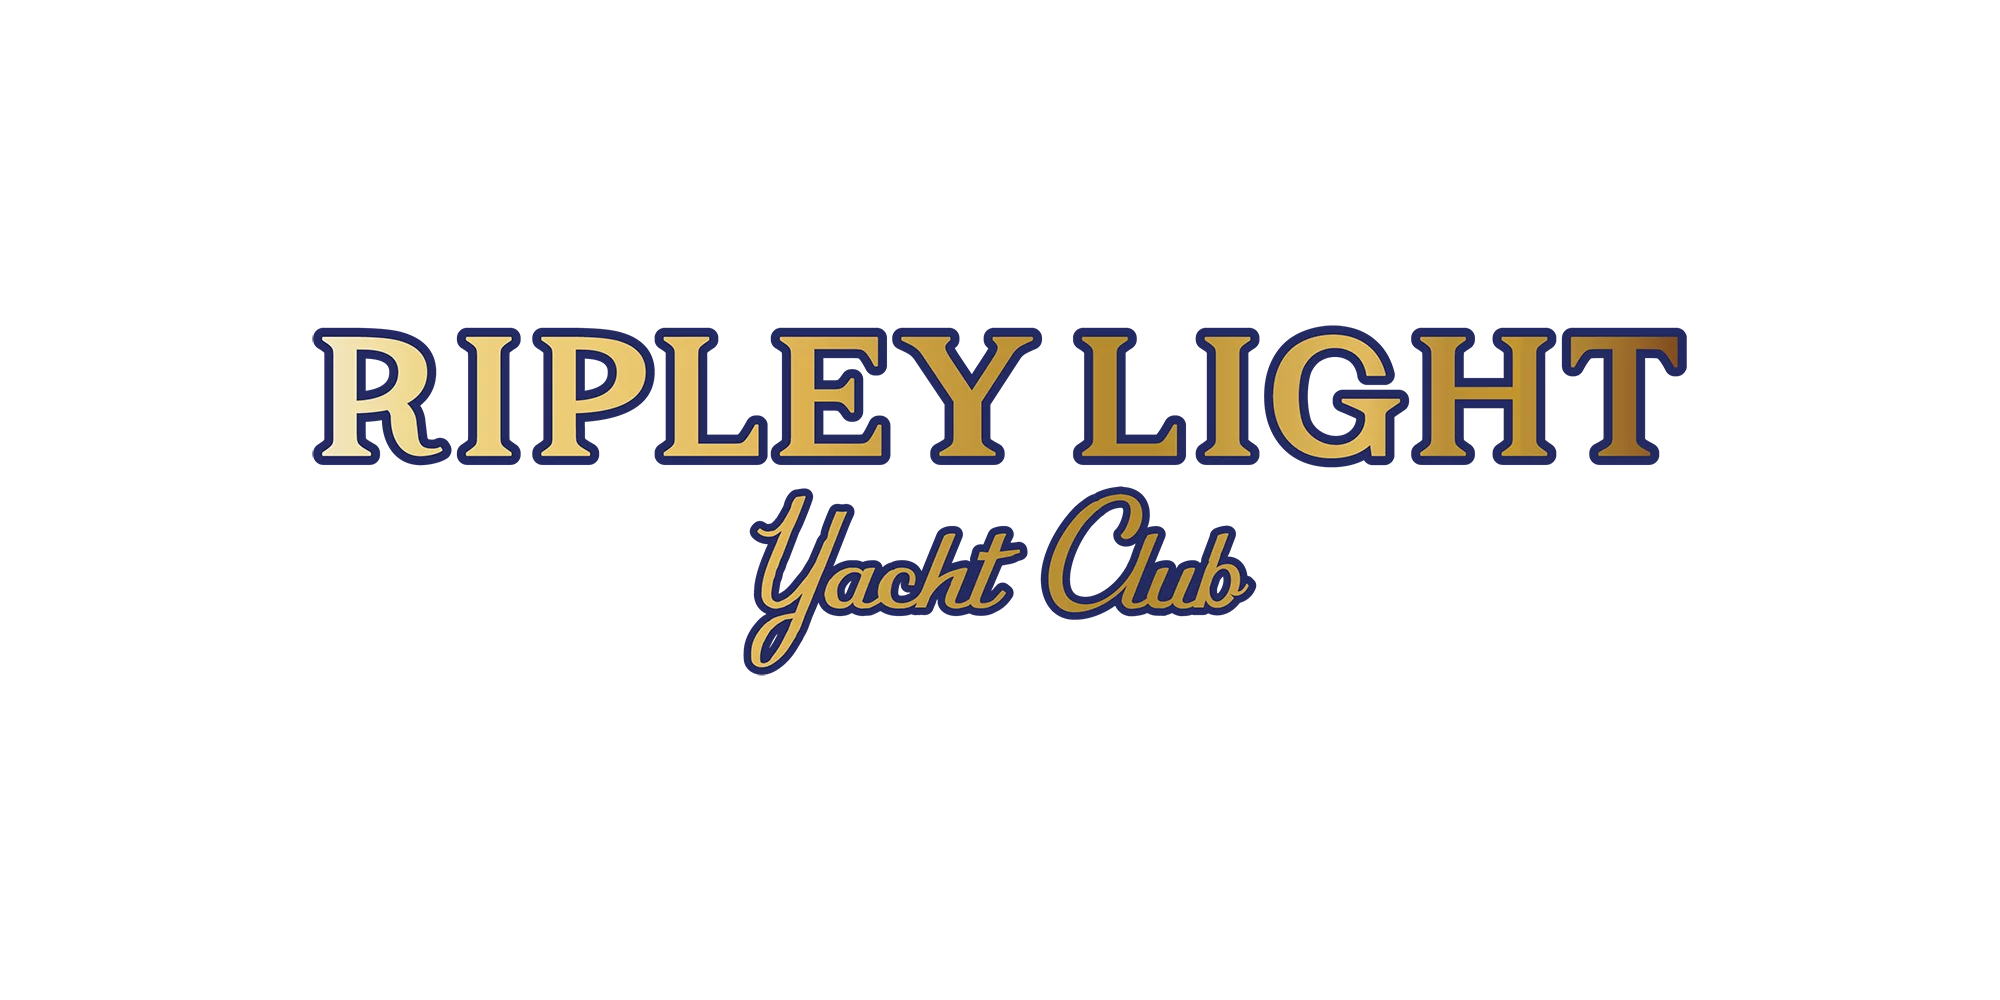 yacht club in charleston sc